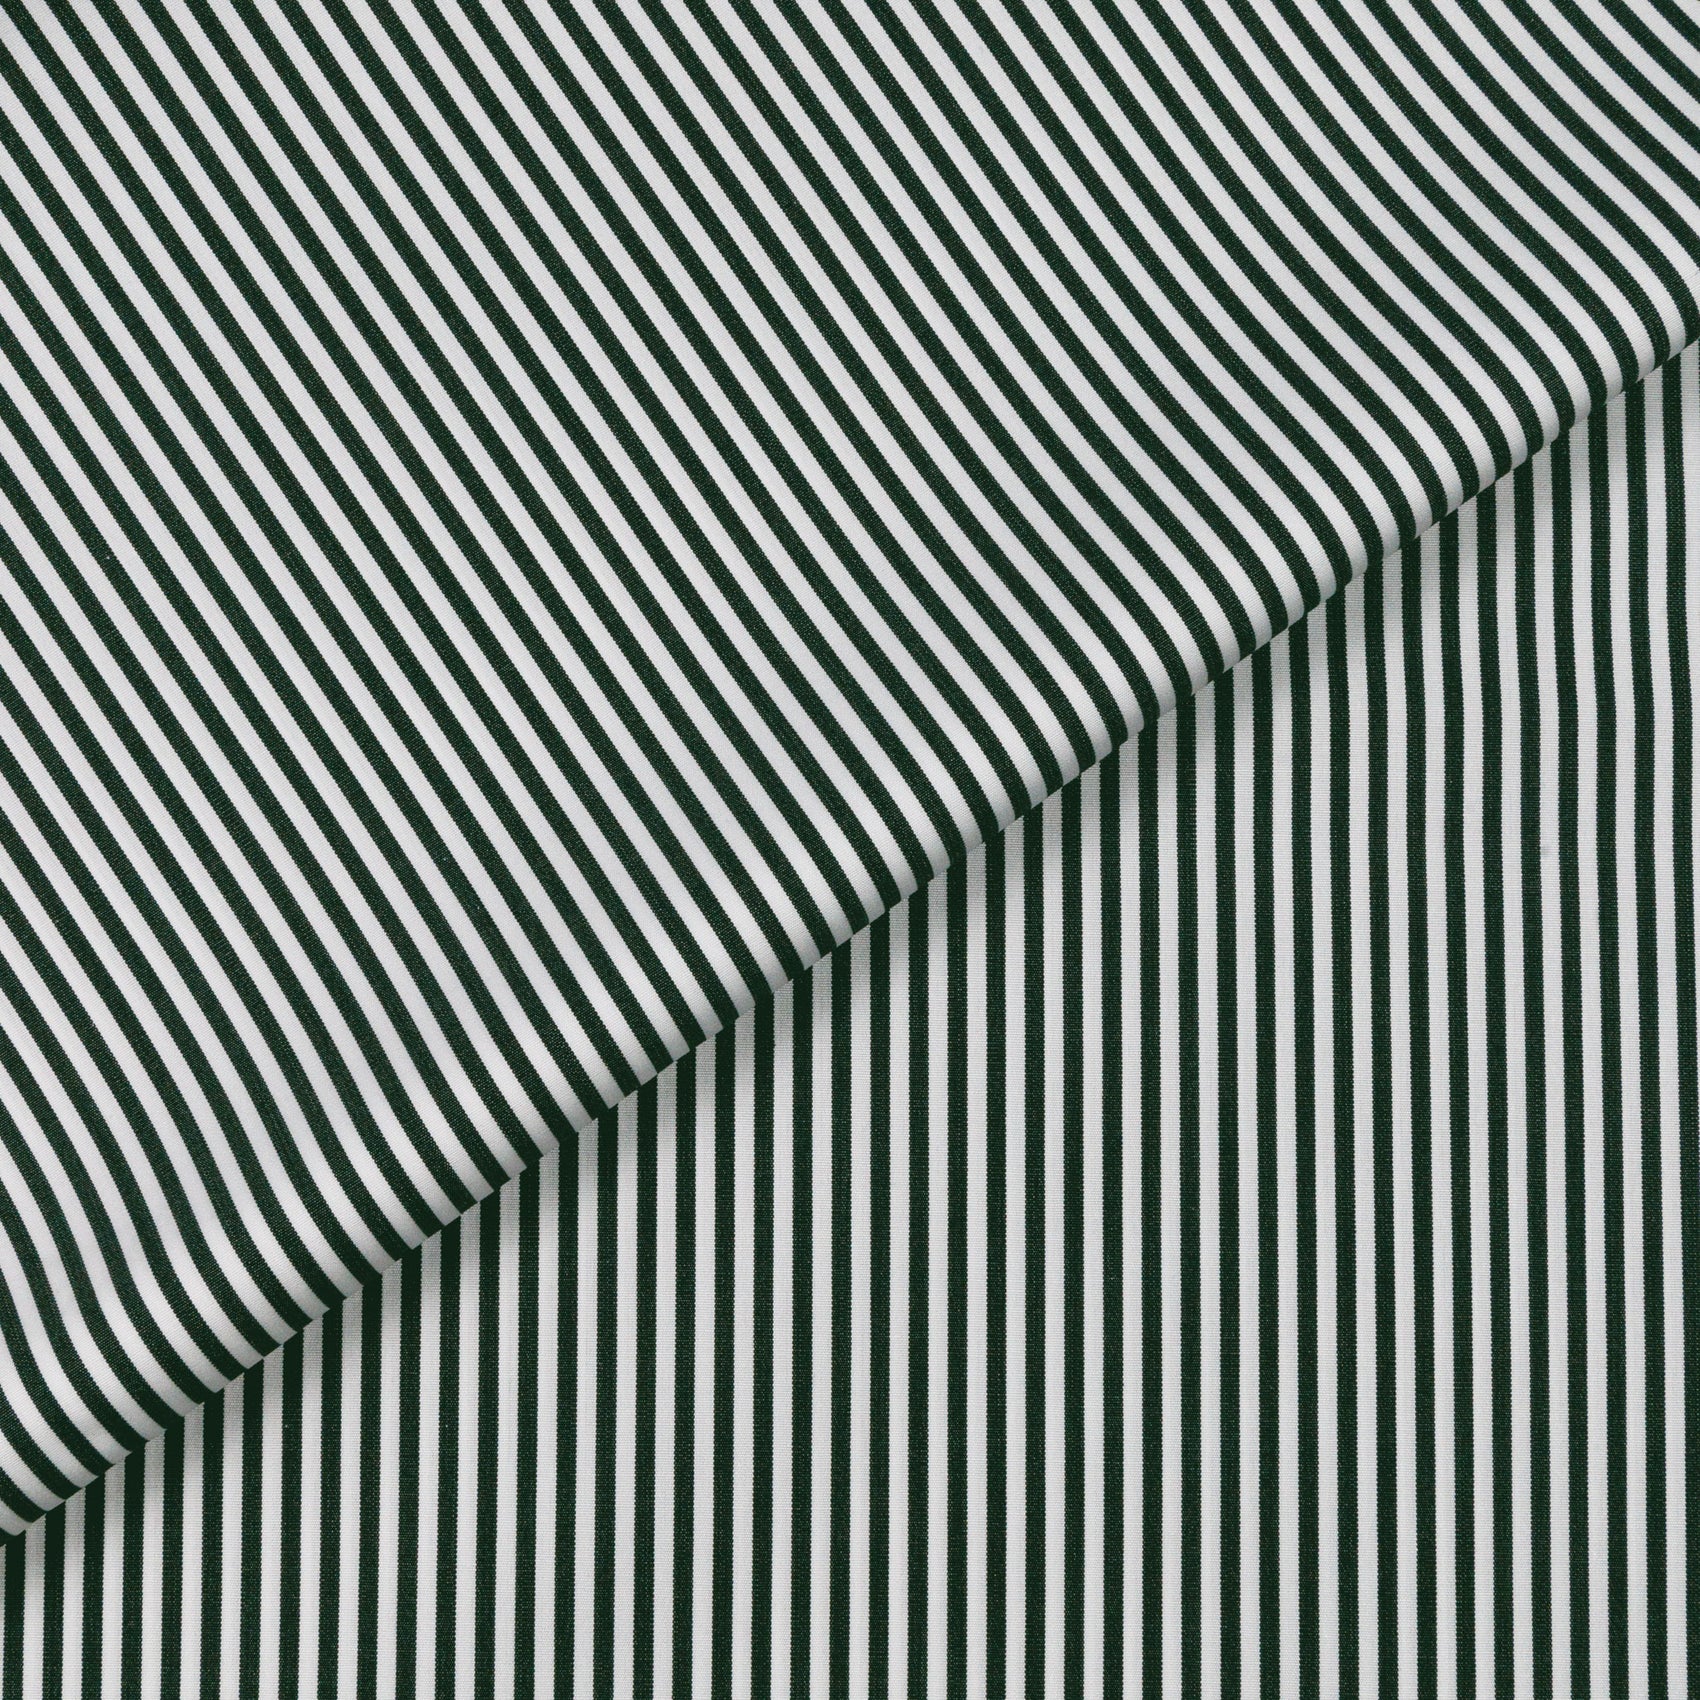 San Francisco Dark Green Stripe Poplin Cotton Shirt MSC0761